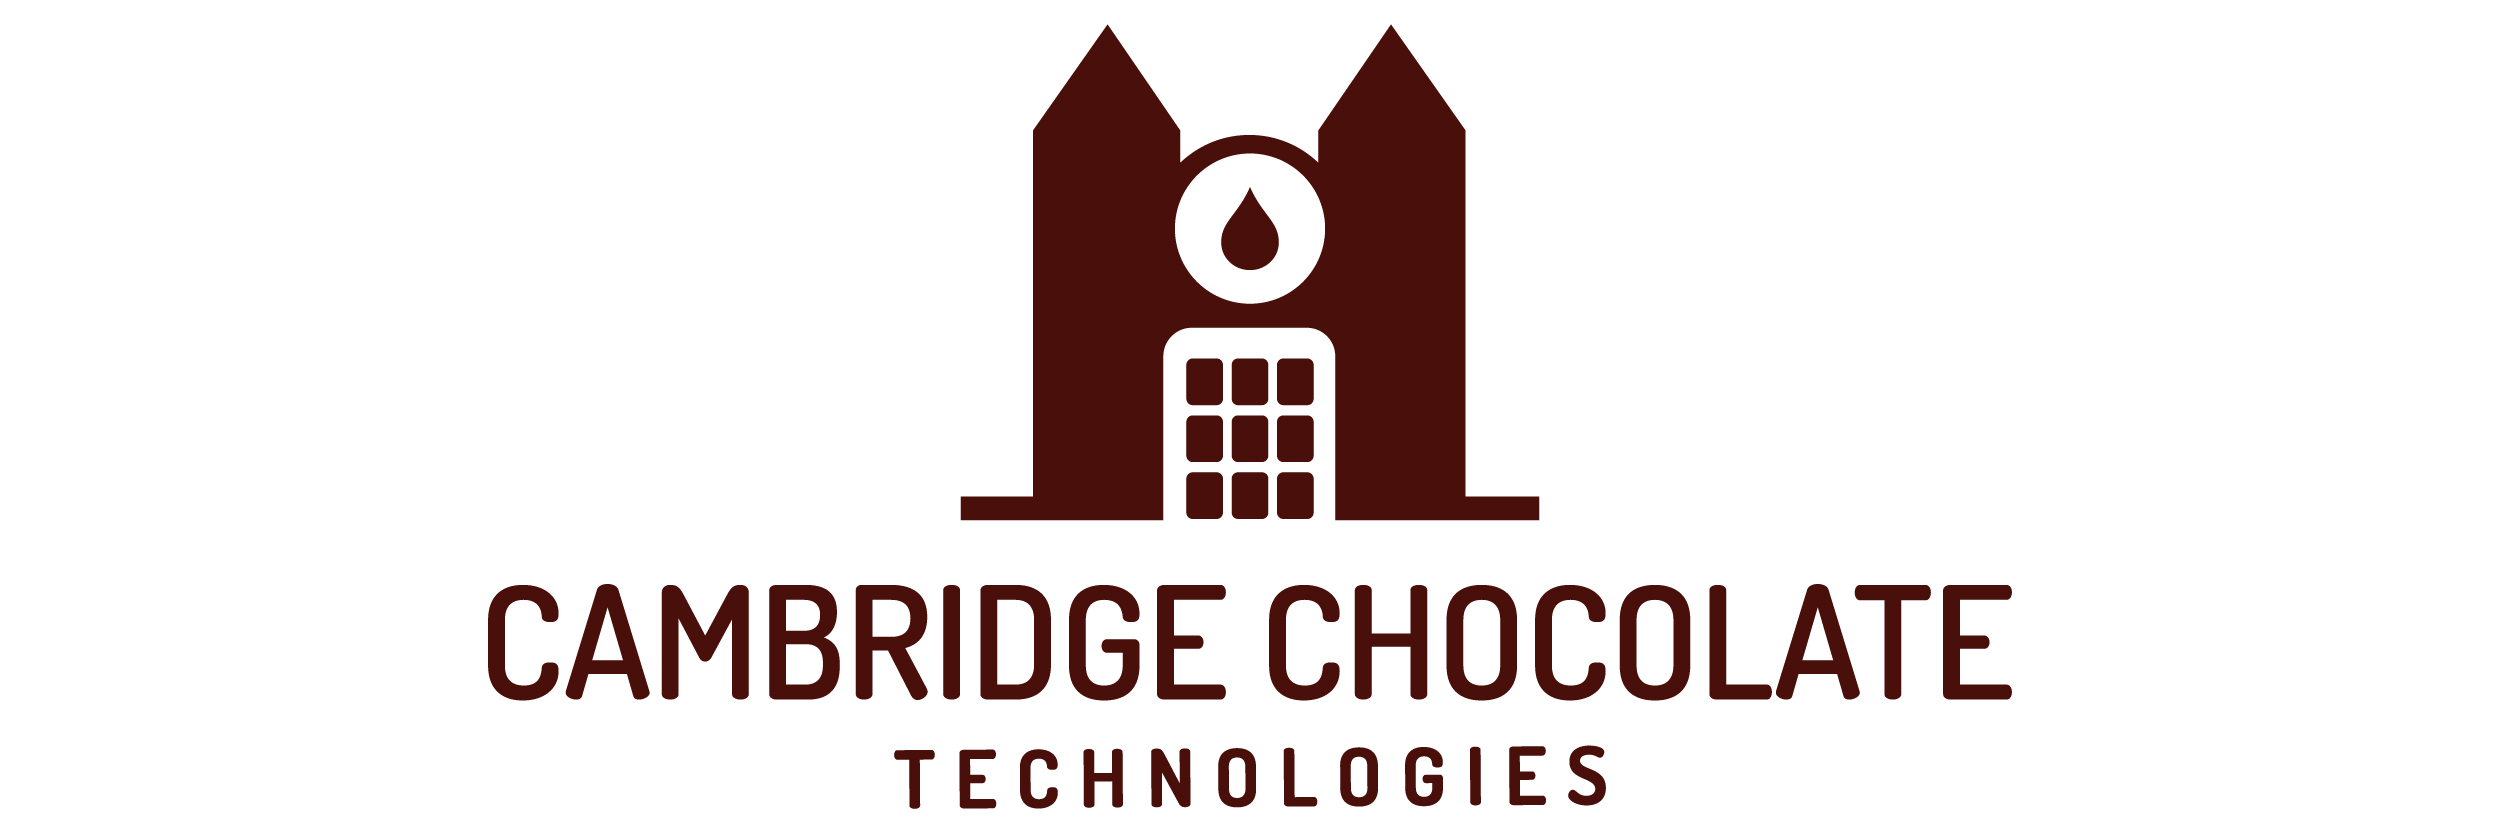 cambridge-chocolate-technologies